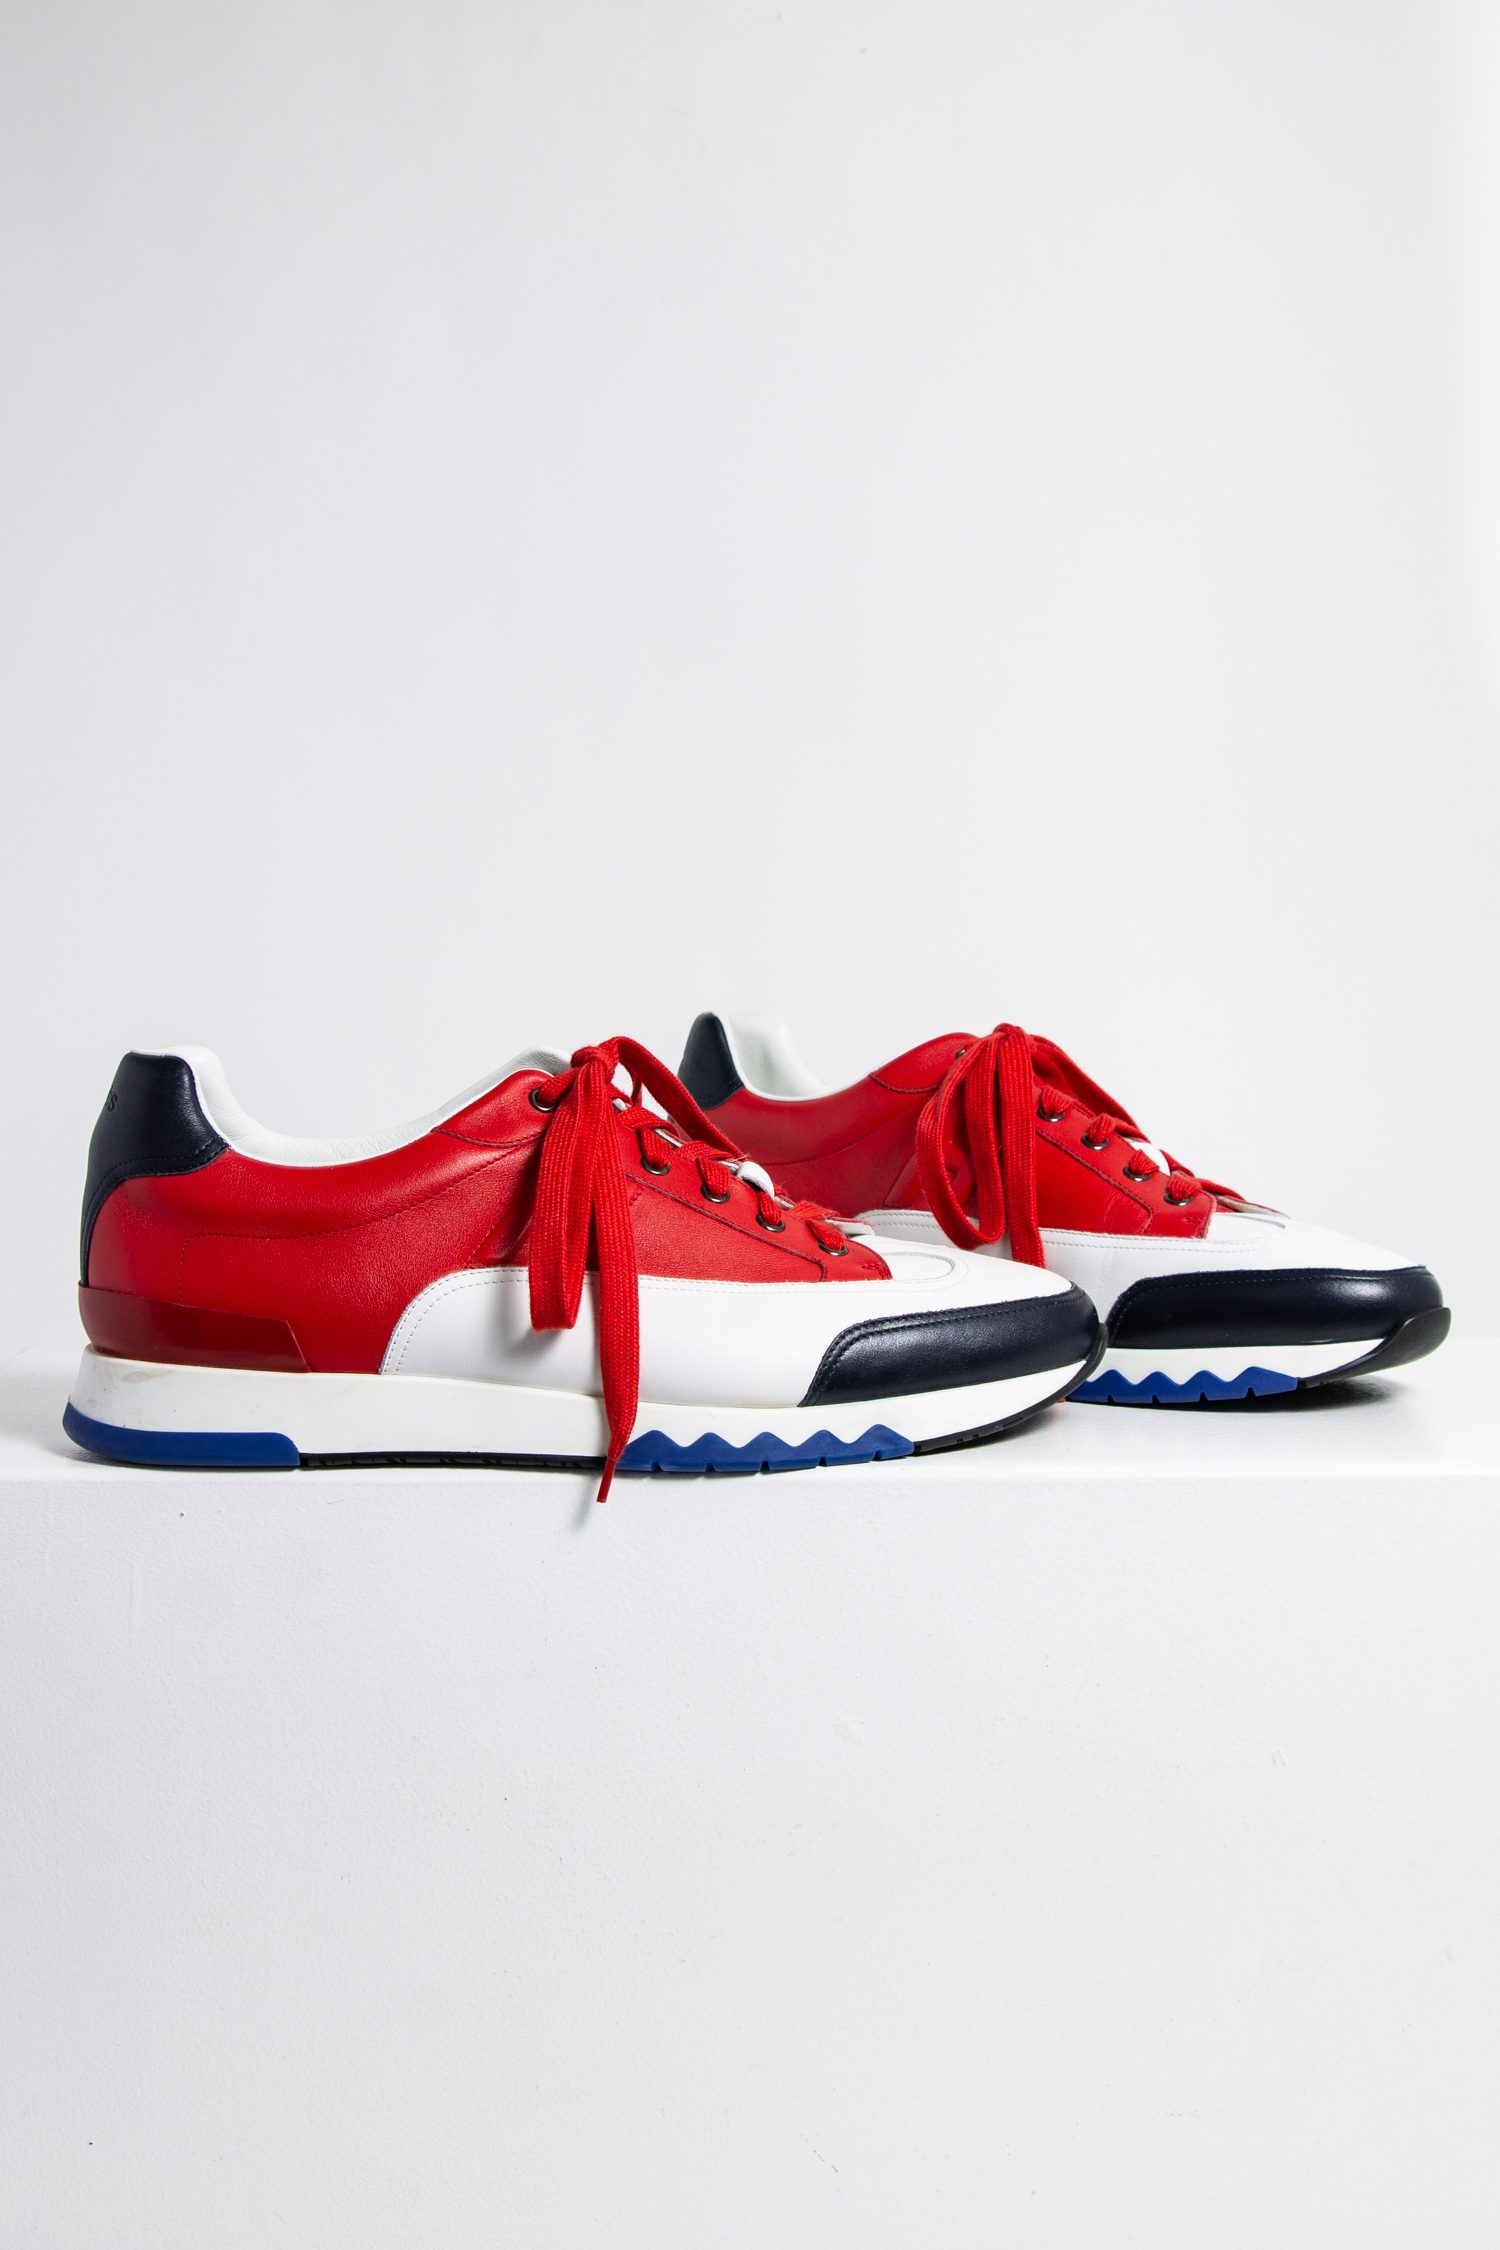 Hermès "Trail" Sneaker in weiß, rot und blau